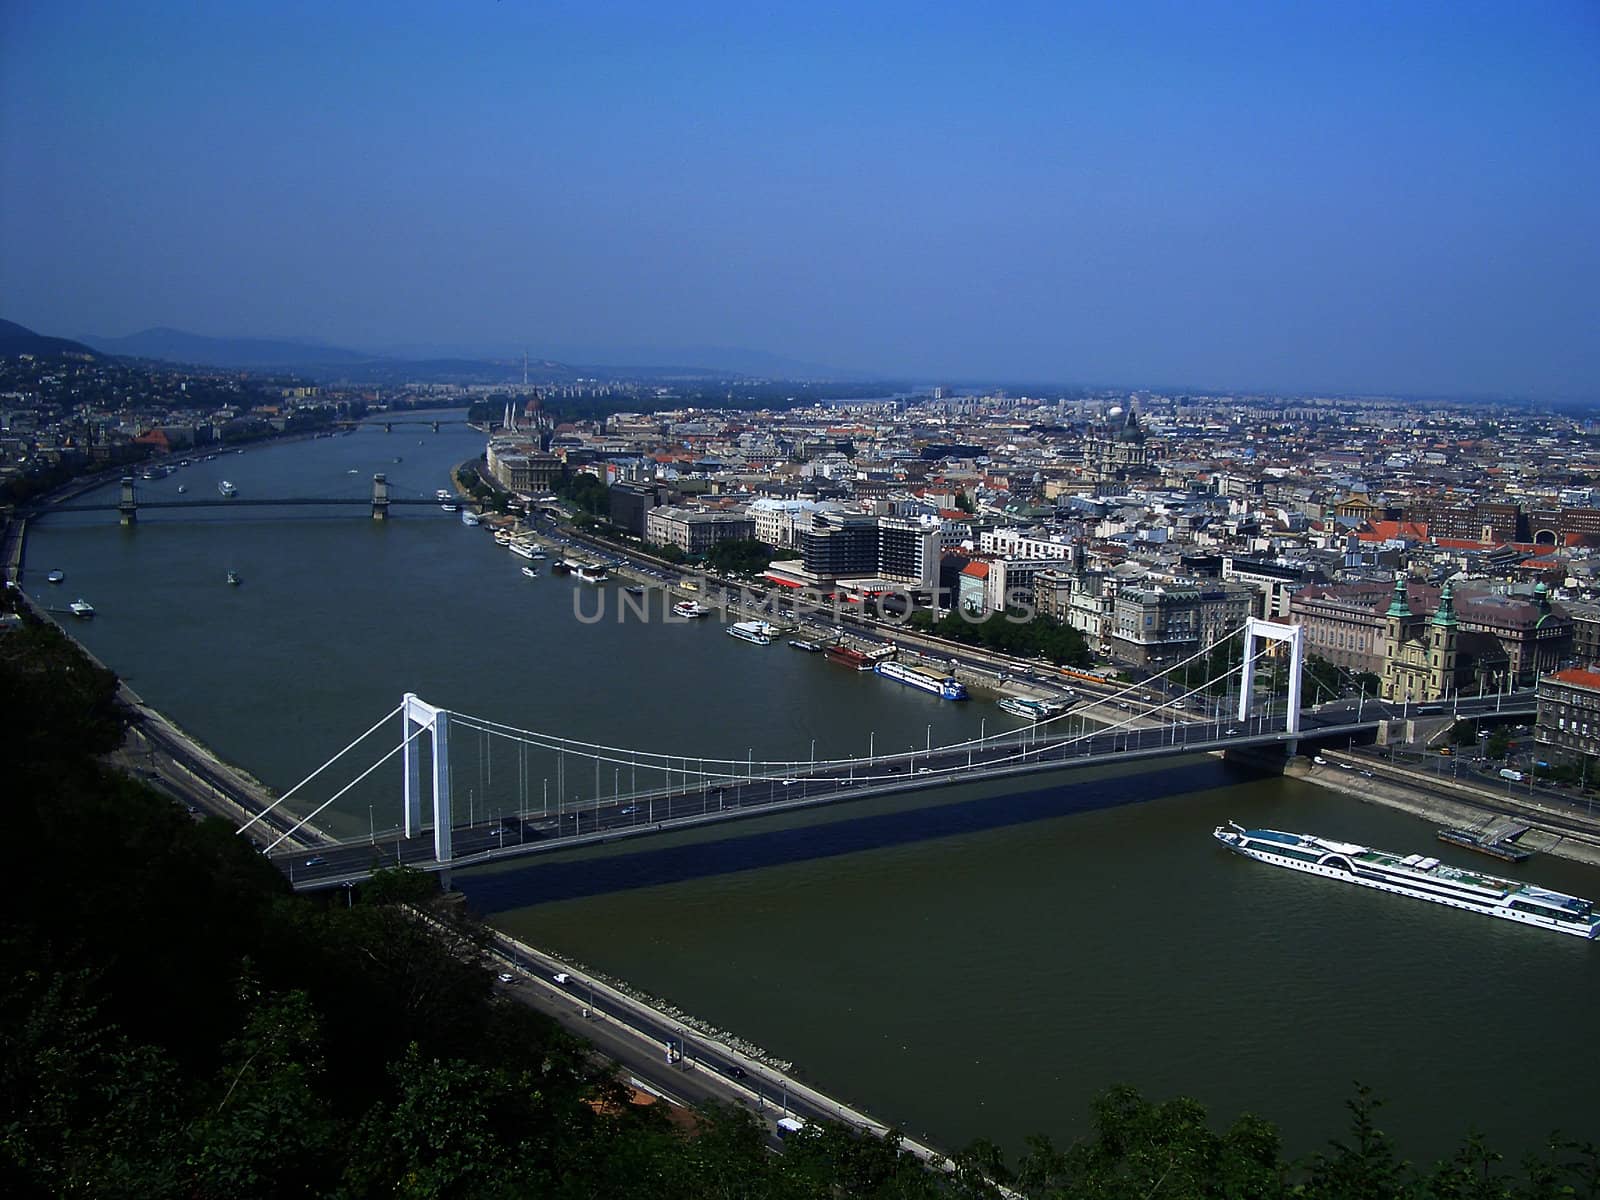 Panoramic view of Budapest and the Danube River, Hungary by marcorubino